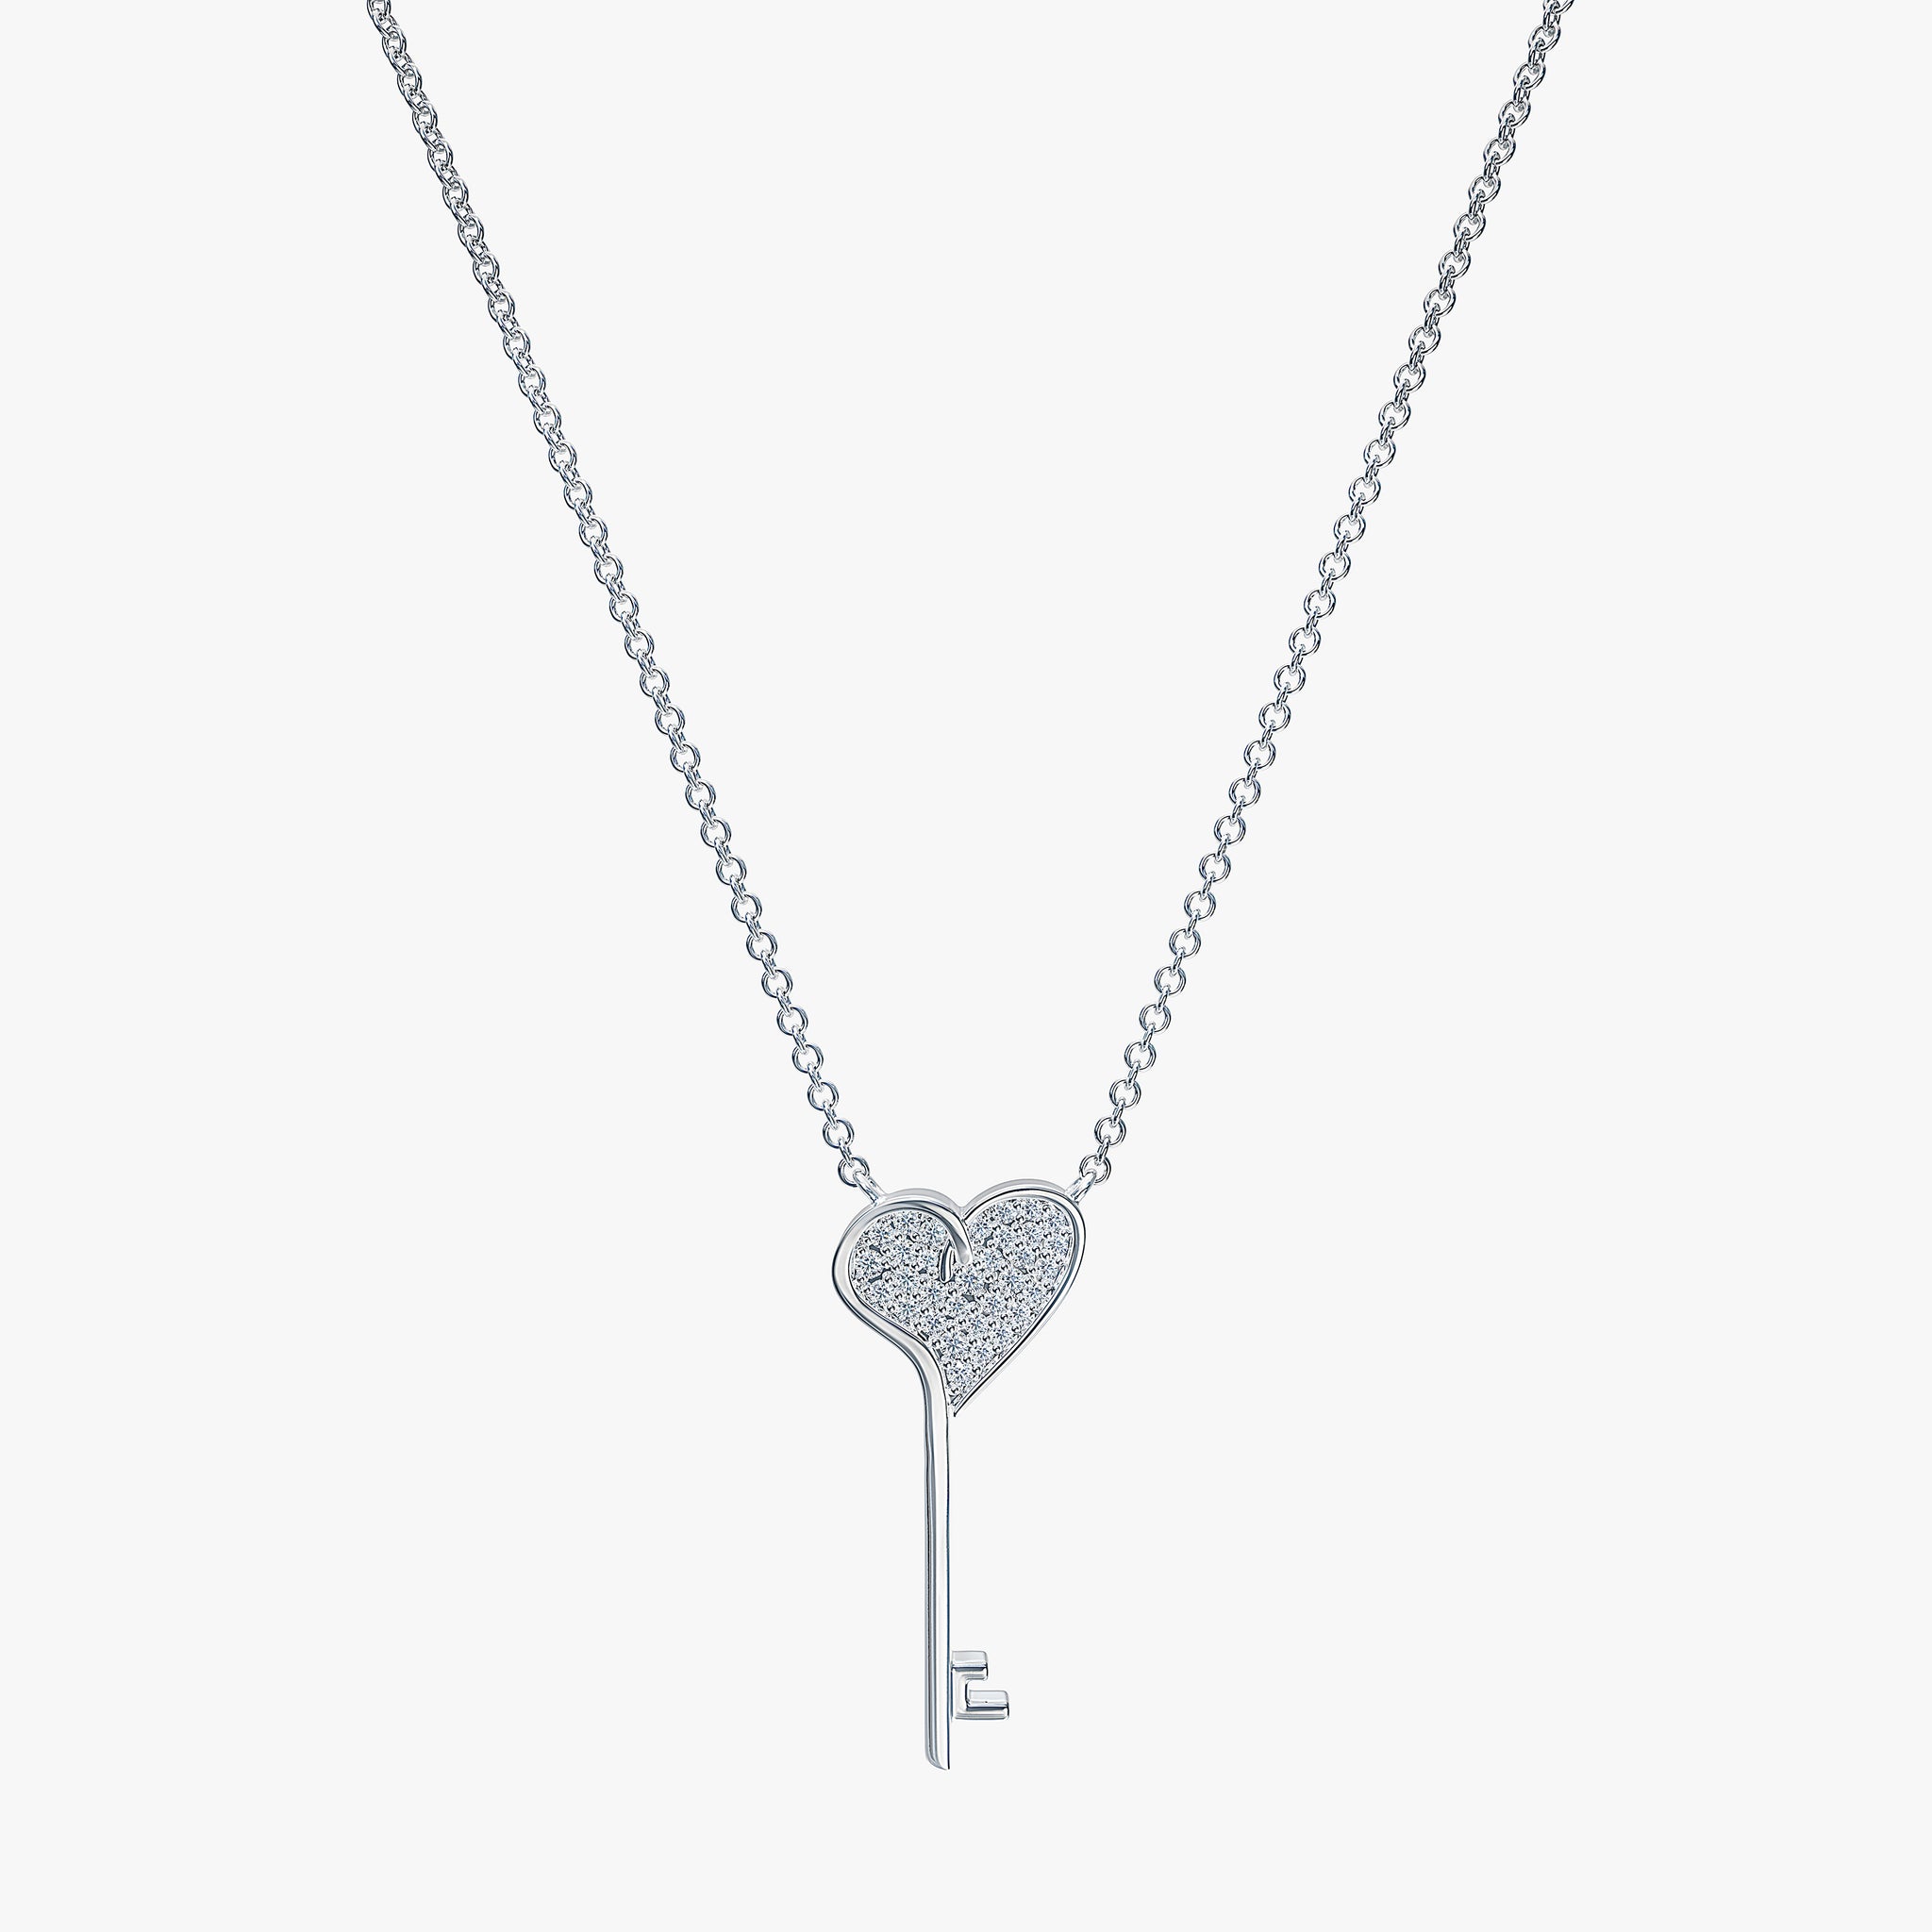 J'EVAR 14KT White Gold Heart Key ALTR Lab Grown Diamond Necklace Front View | 0.10 CT